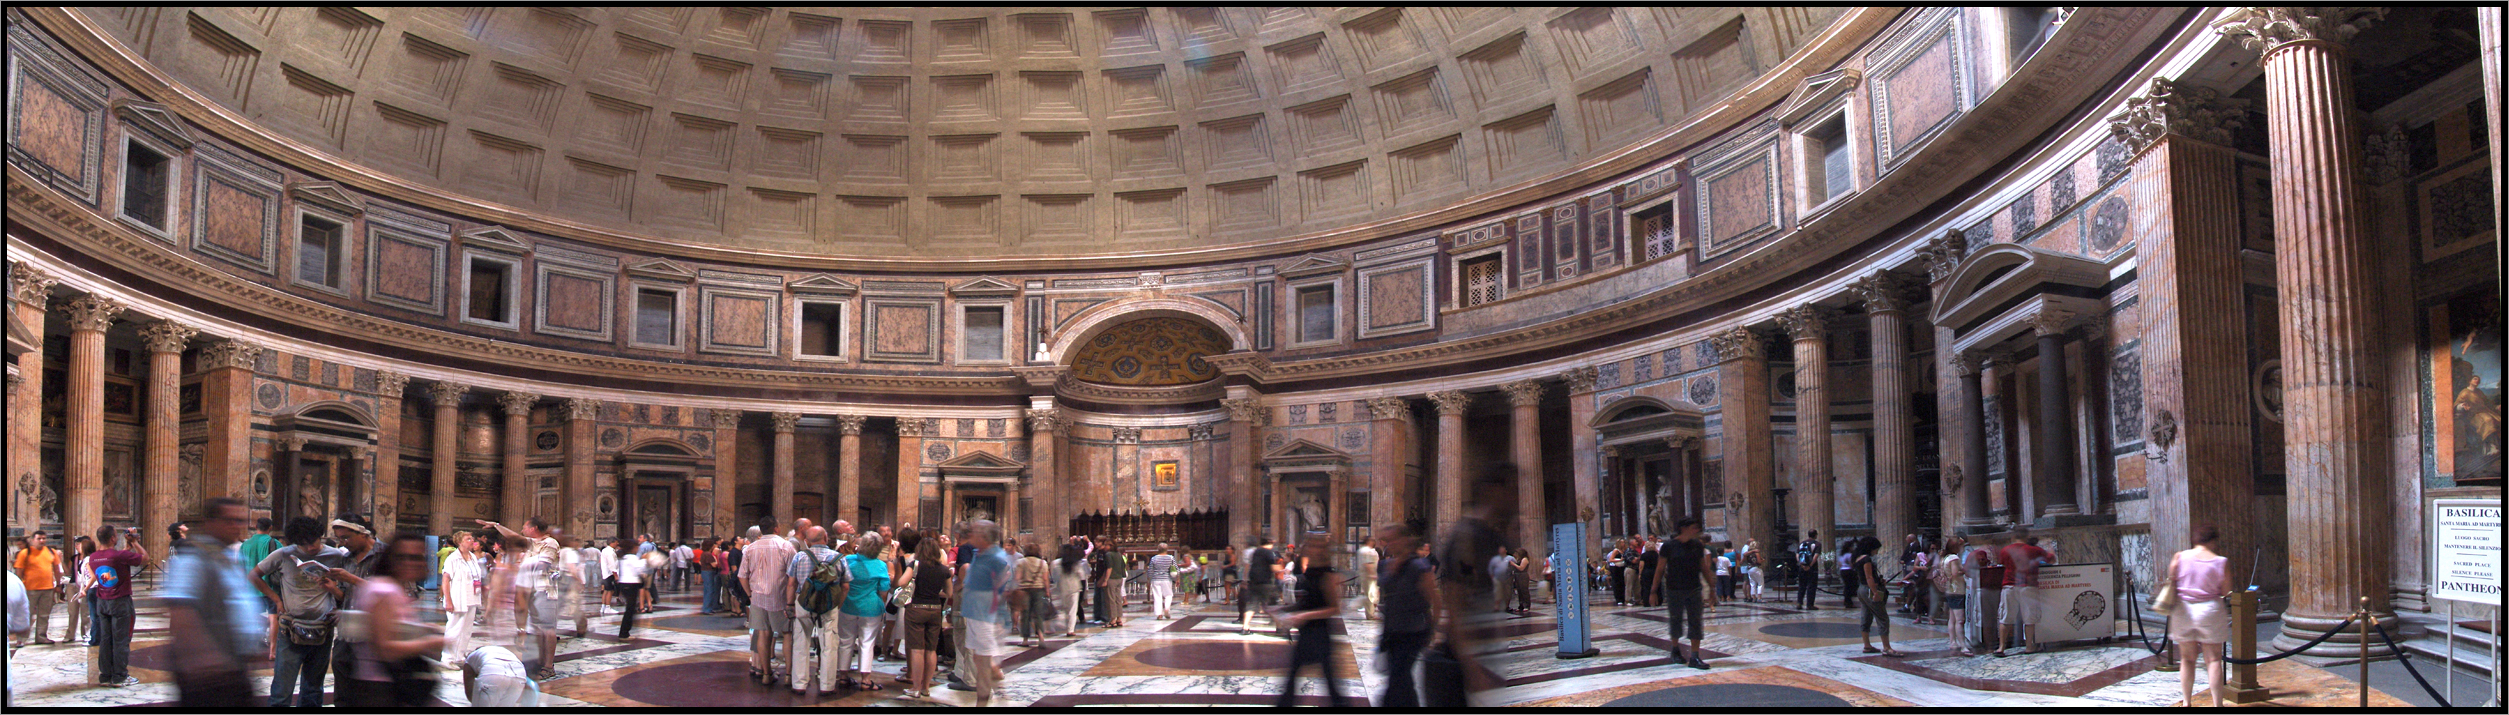 Le Pantheon, Rome, Italie, Août 2006